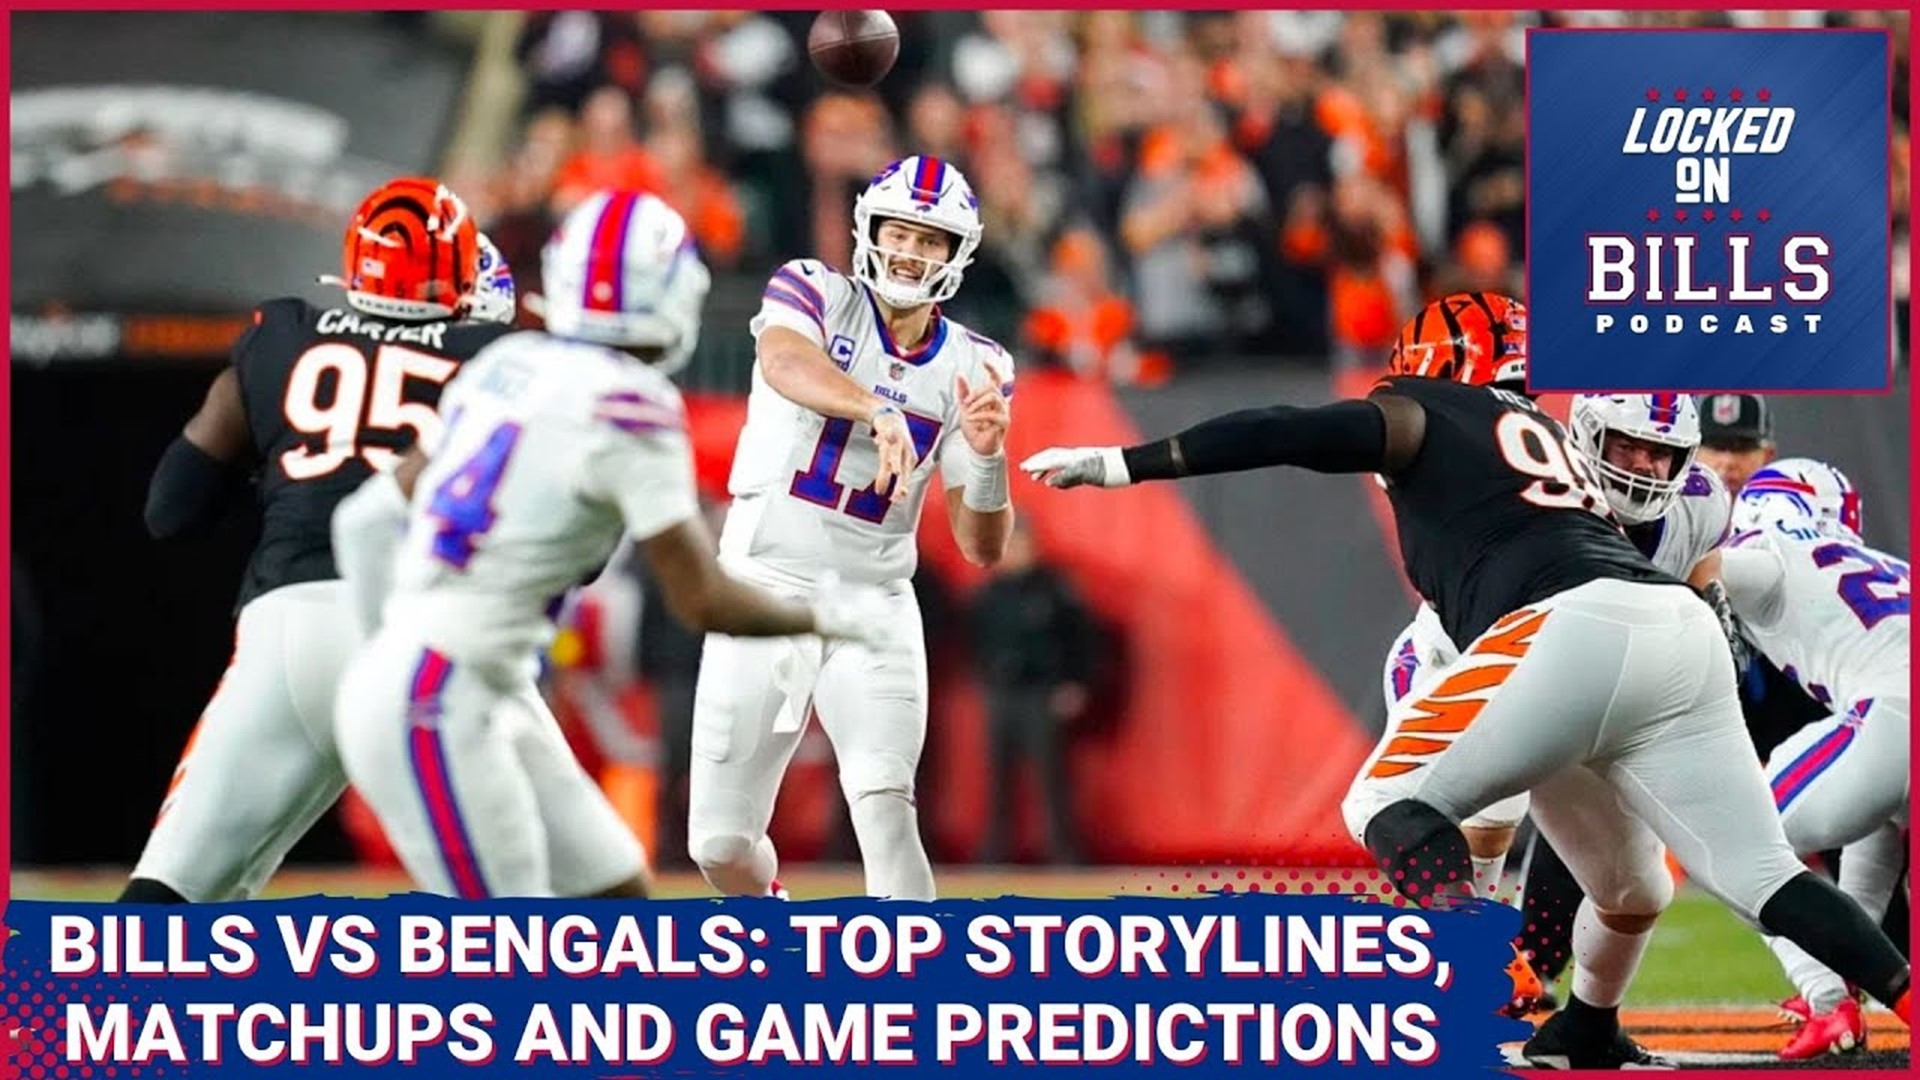 Cincinnati Bengals vs. Buffalo Bills predictions for NFL playoff game